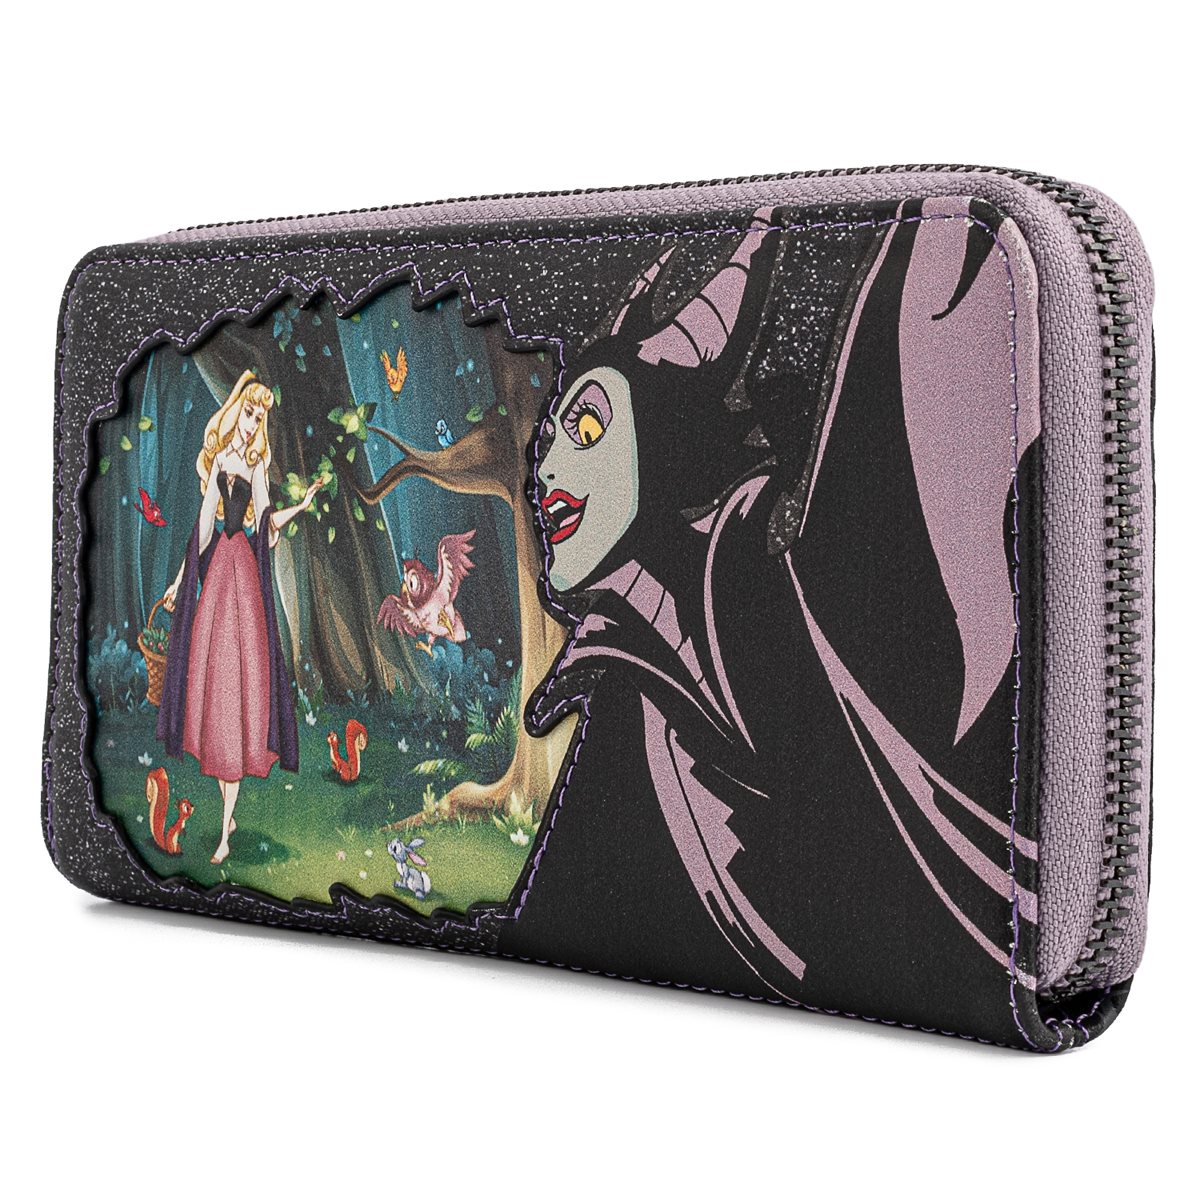 Loungefly Disney Maleficent Sleeping Beauty Crossbody Satchel Handbag  Purse, Black, Large, black